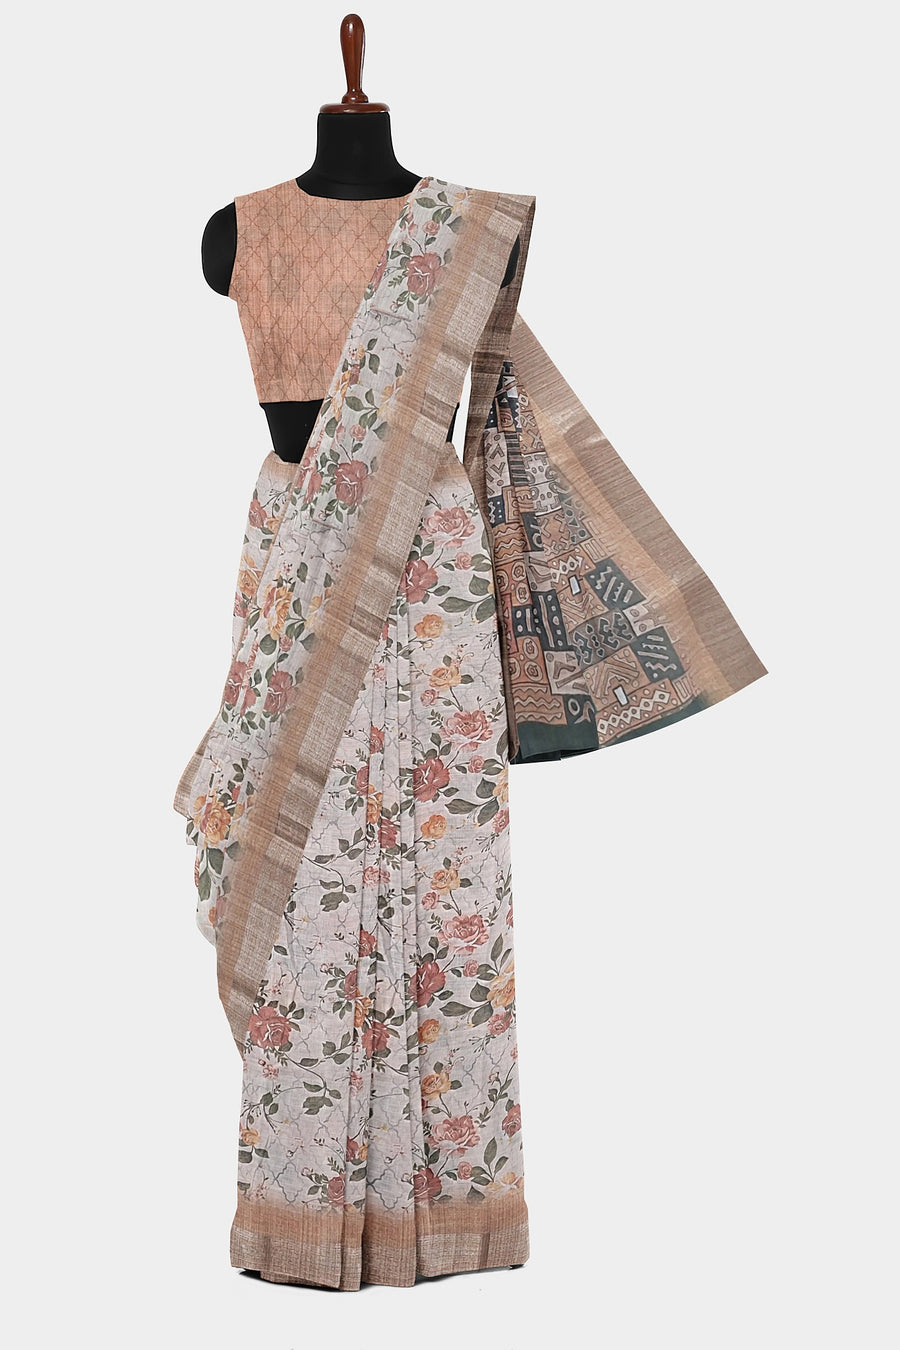 Pure Linen Digital Print Saree by Sarandhri Sanyogita Pallu Petry in Cream x One Blouse